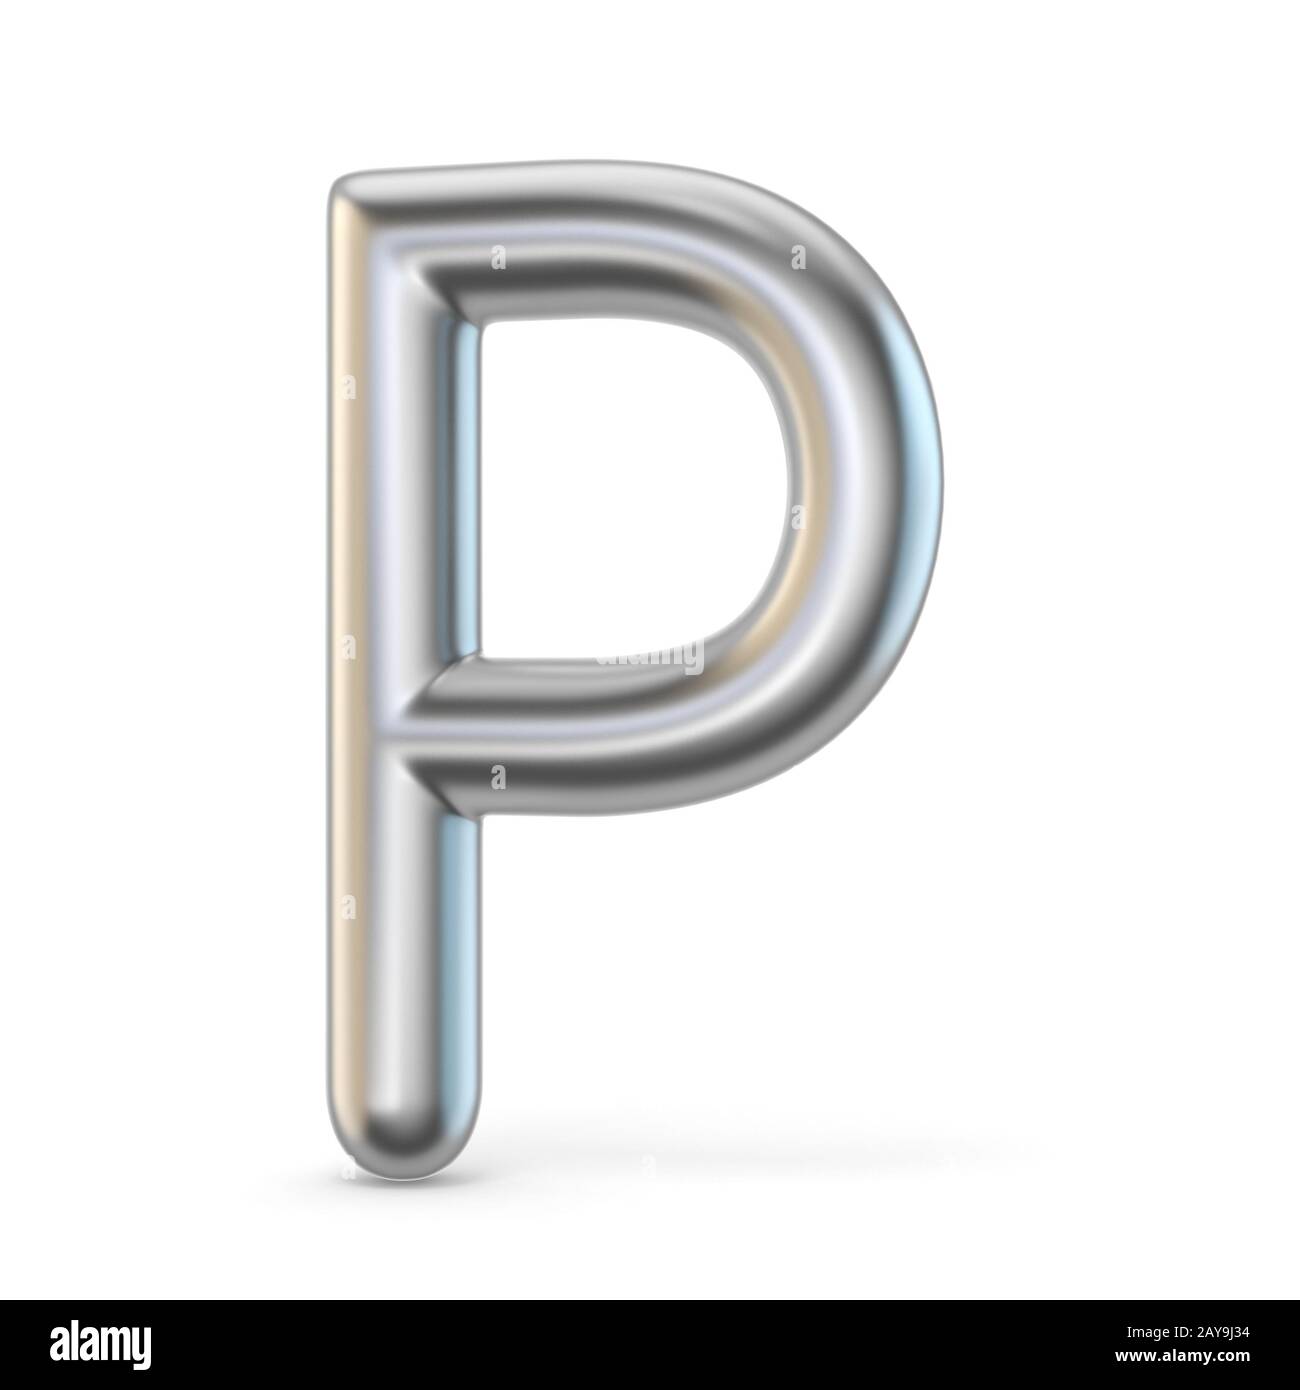 Metal alphabet symbol. Letter P 3D Stock Photo - Alamy